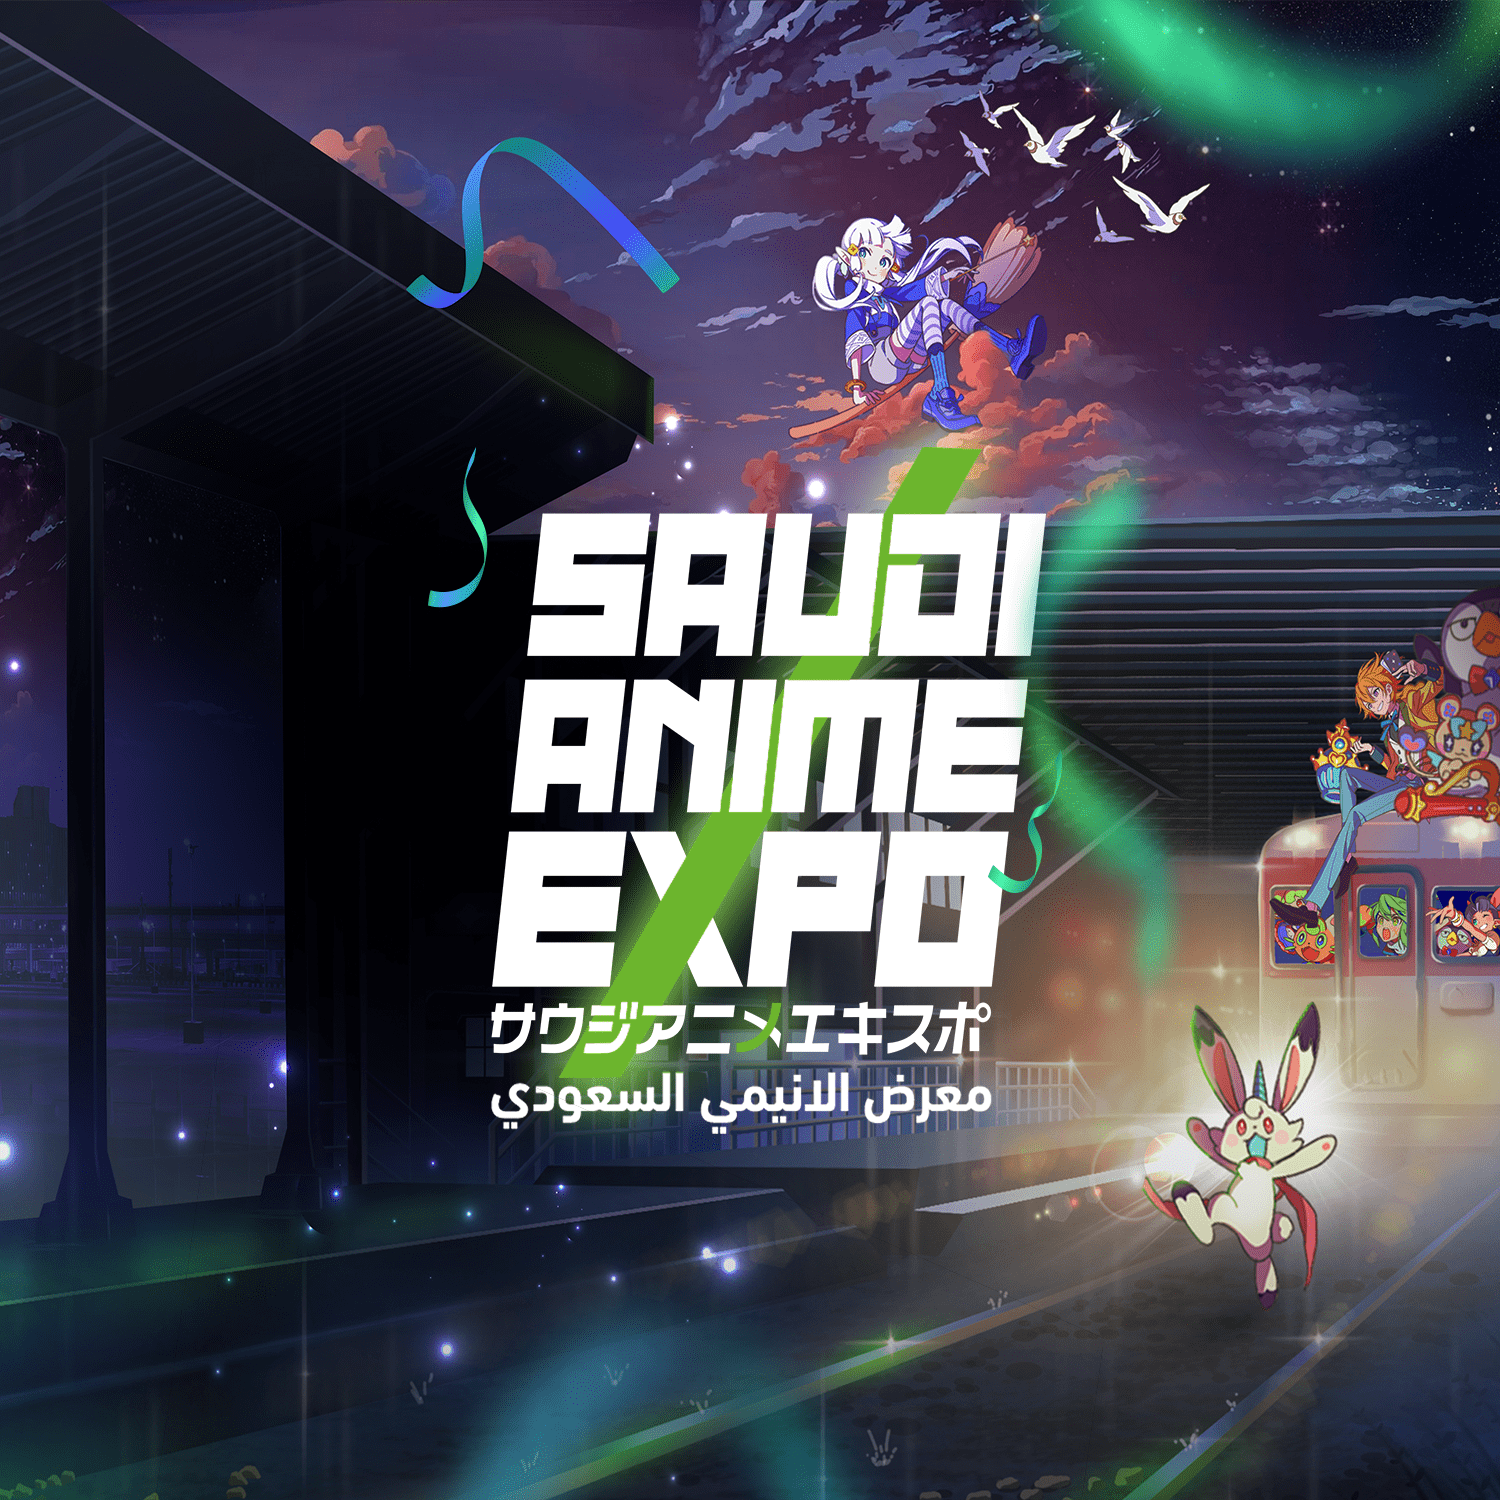 ExhibitorInfoTest - Anime Expo